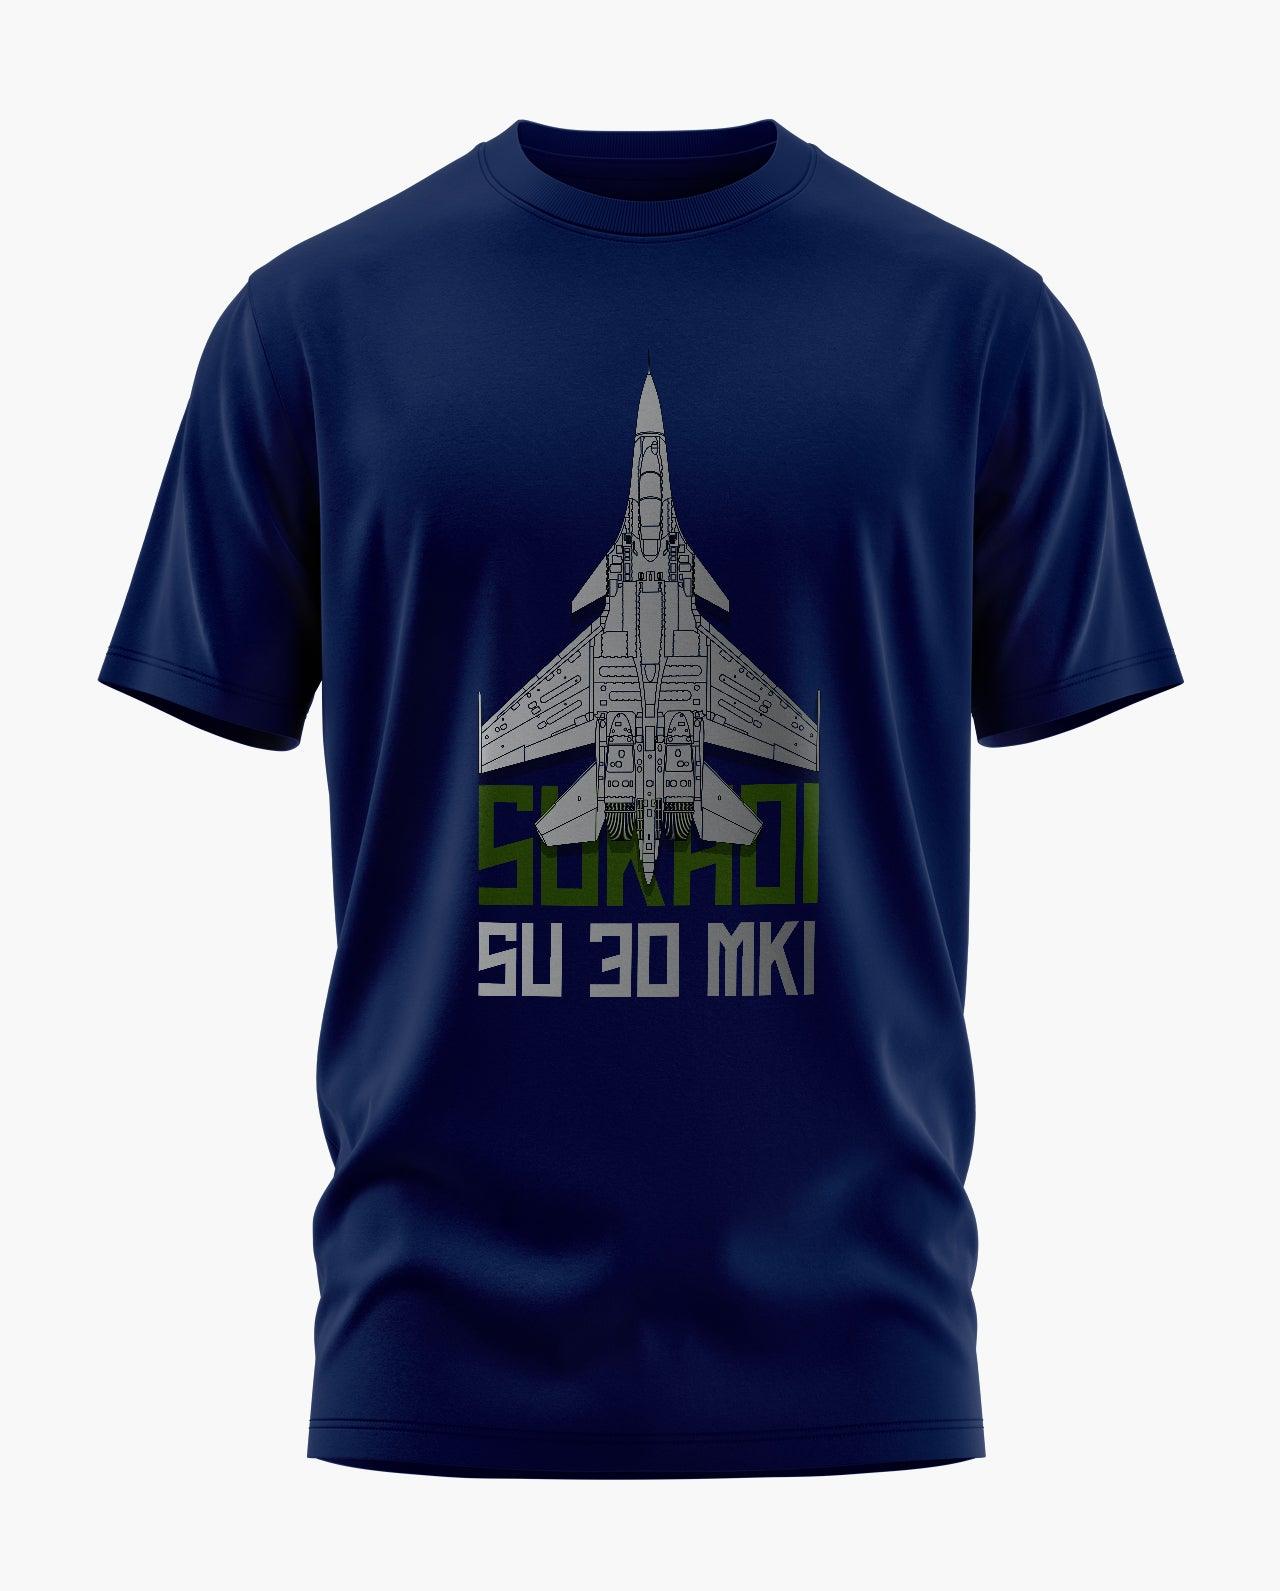 Sukhoi Su-30 MKI T-Shirt - Aero Armour